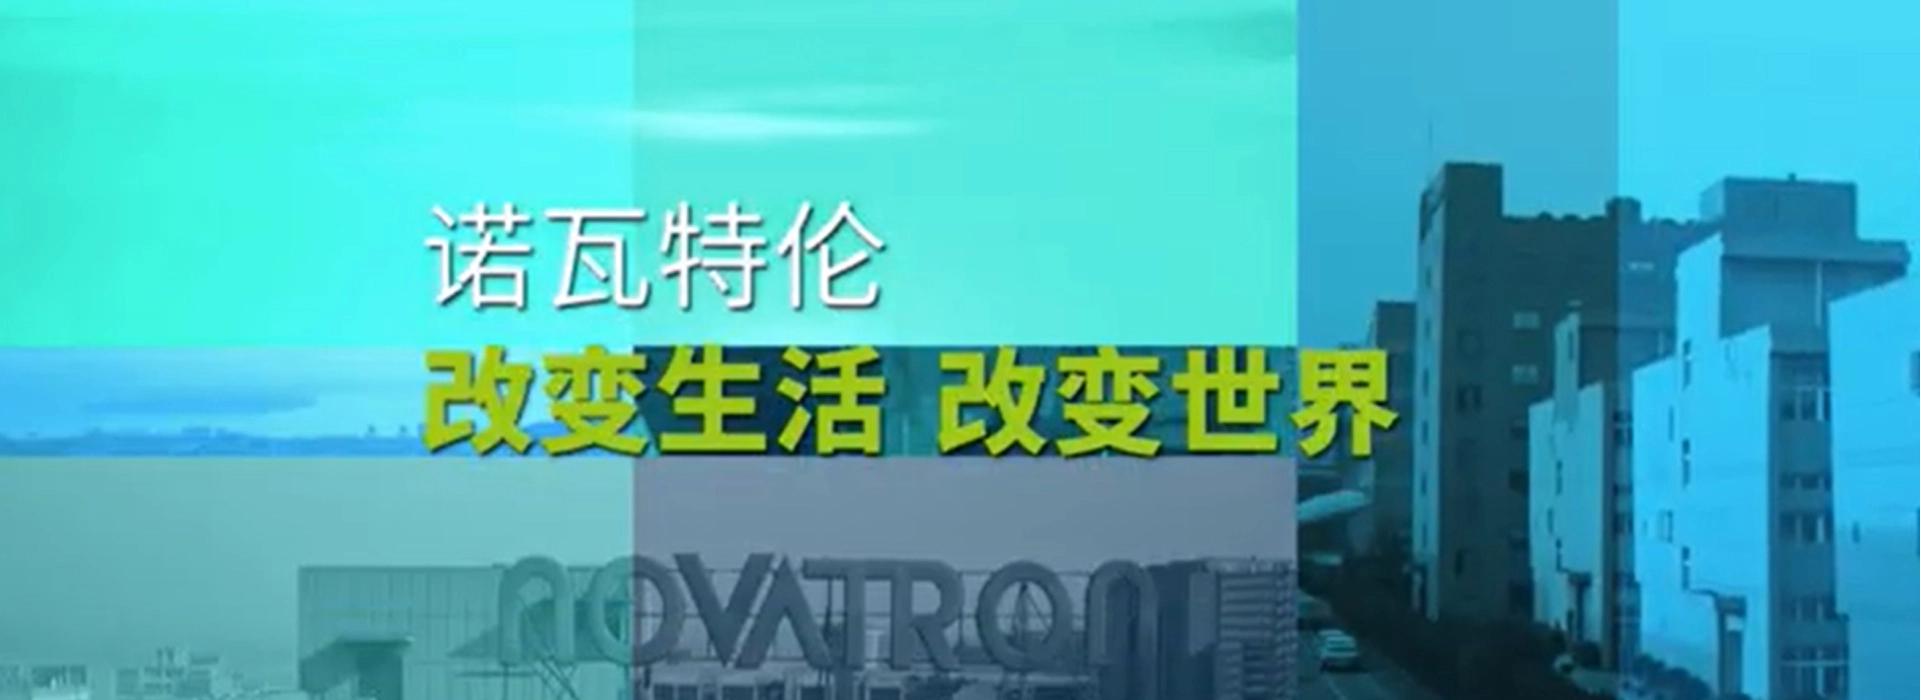 Novatron 회사 프로필 비디오-중국어